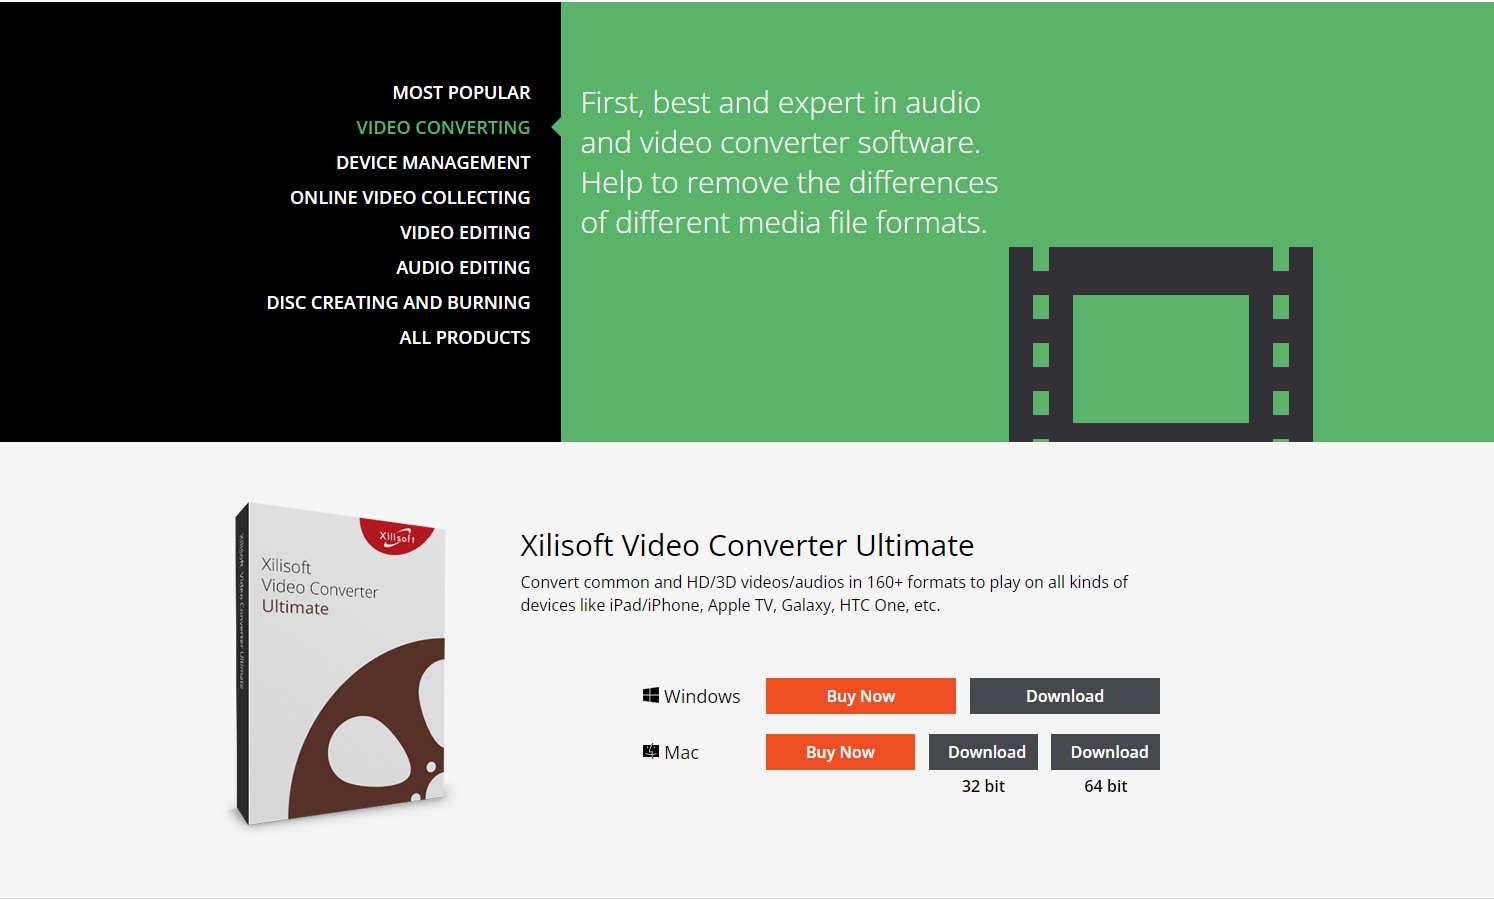 Xilisoft Video to Audio Converter